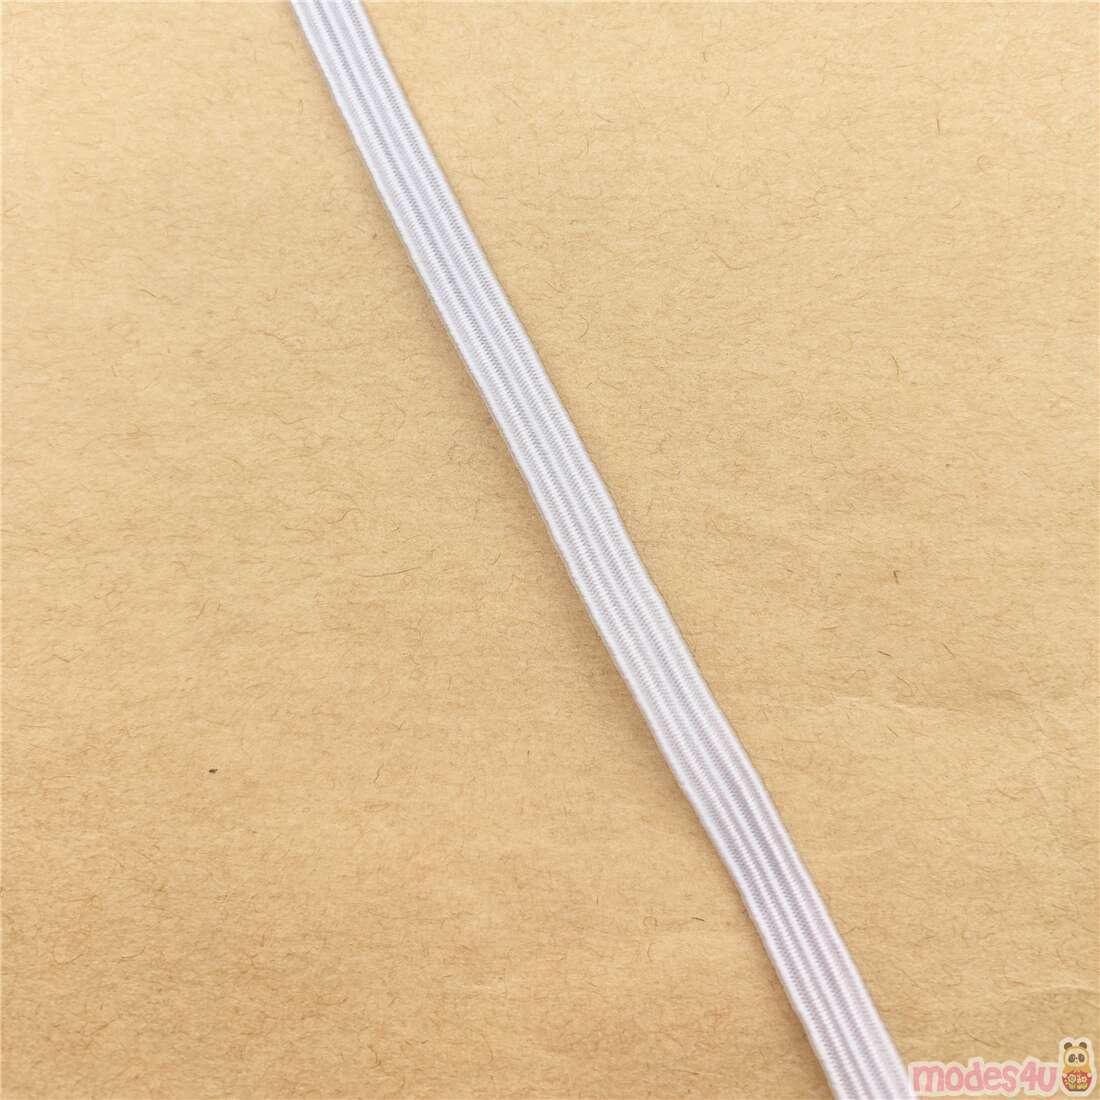 white 0.5cm wide elastic - modeS4u